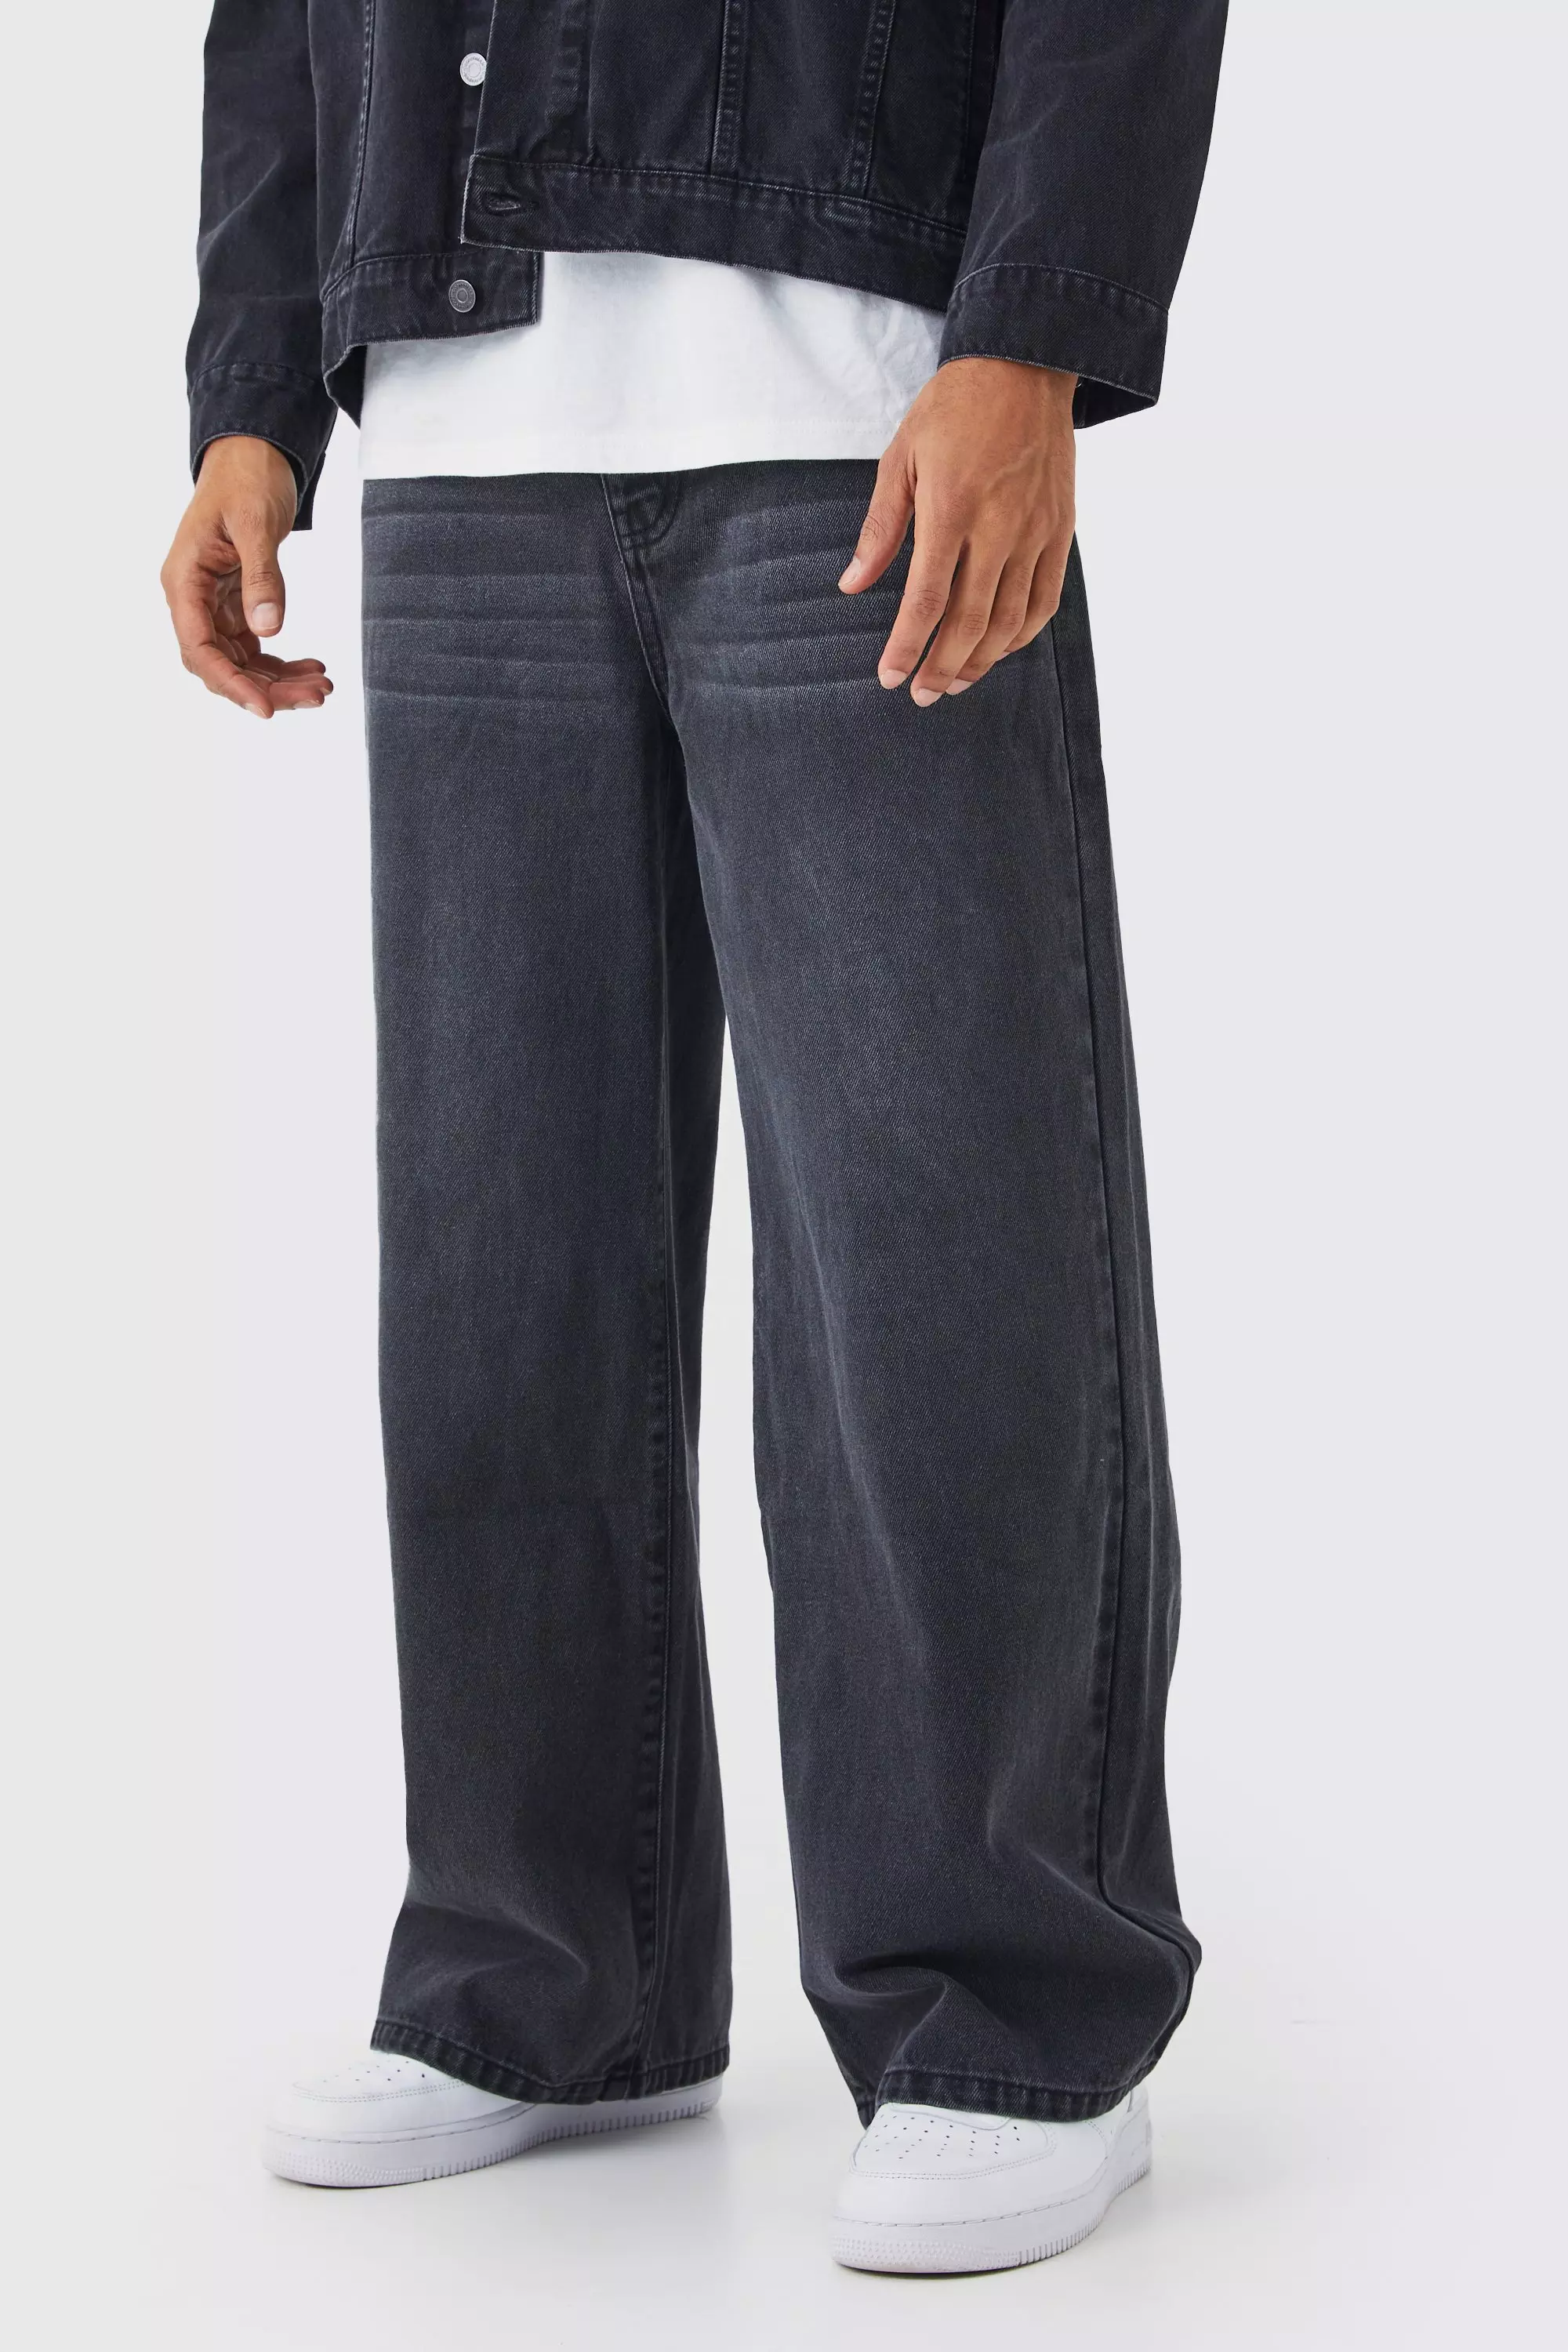 Ash Grey Extreme Baggy Rigid Jeans